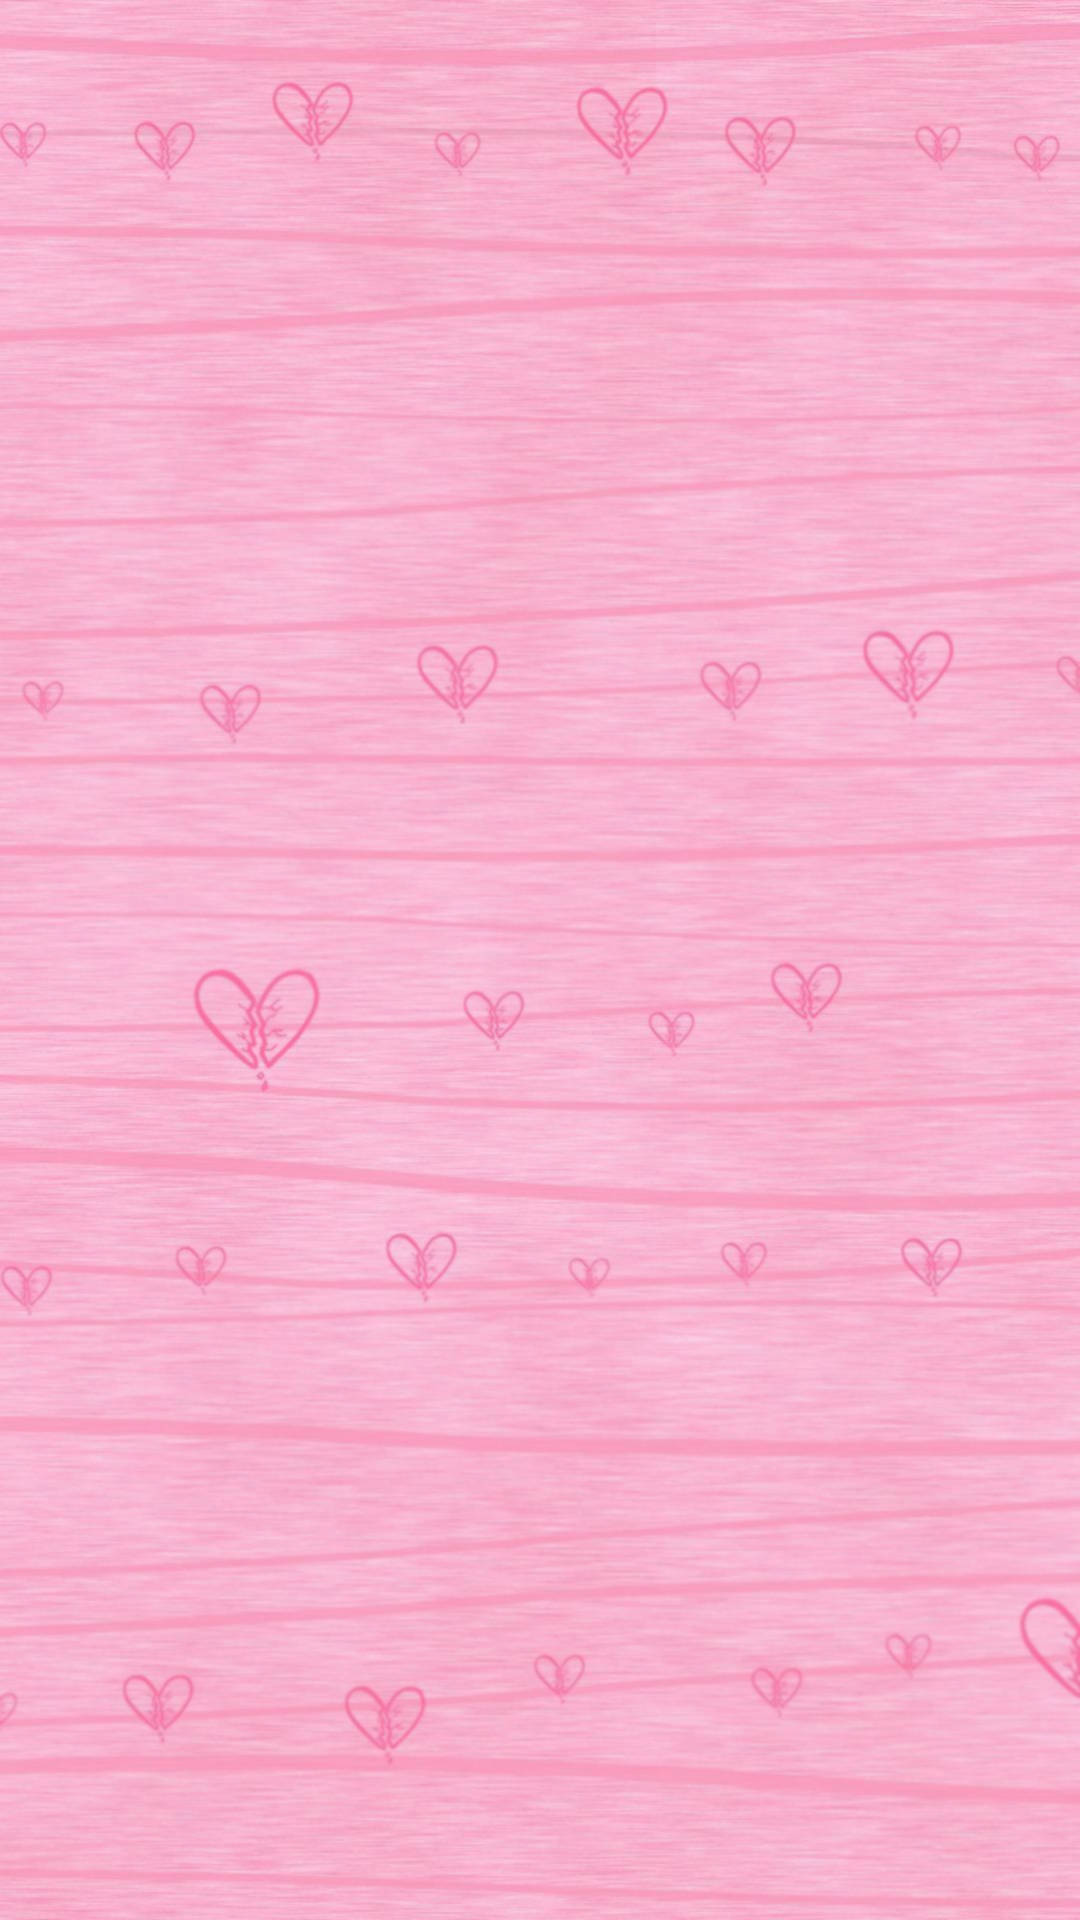 Cute Pink Broken Hearts Background